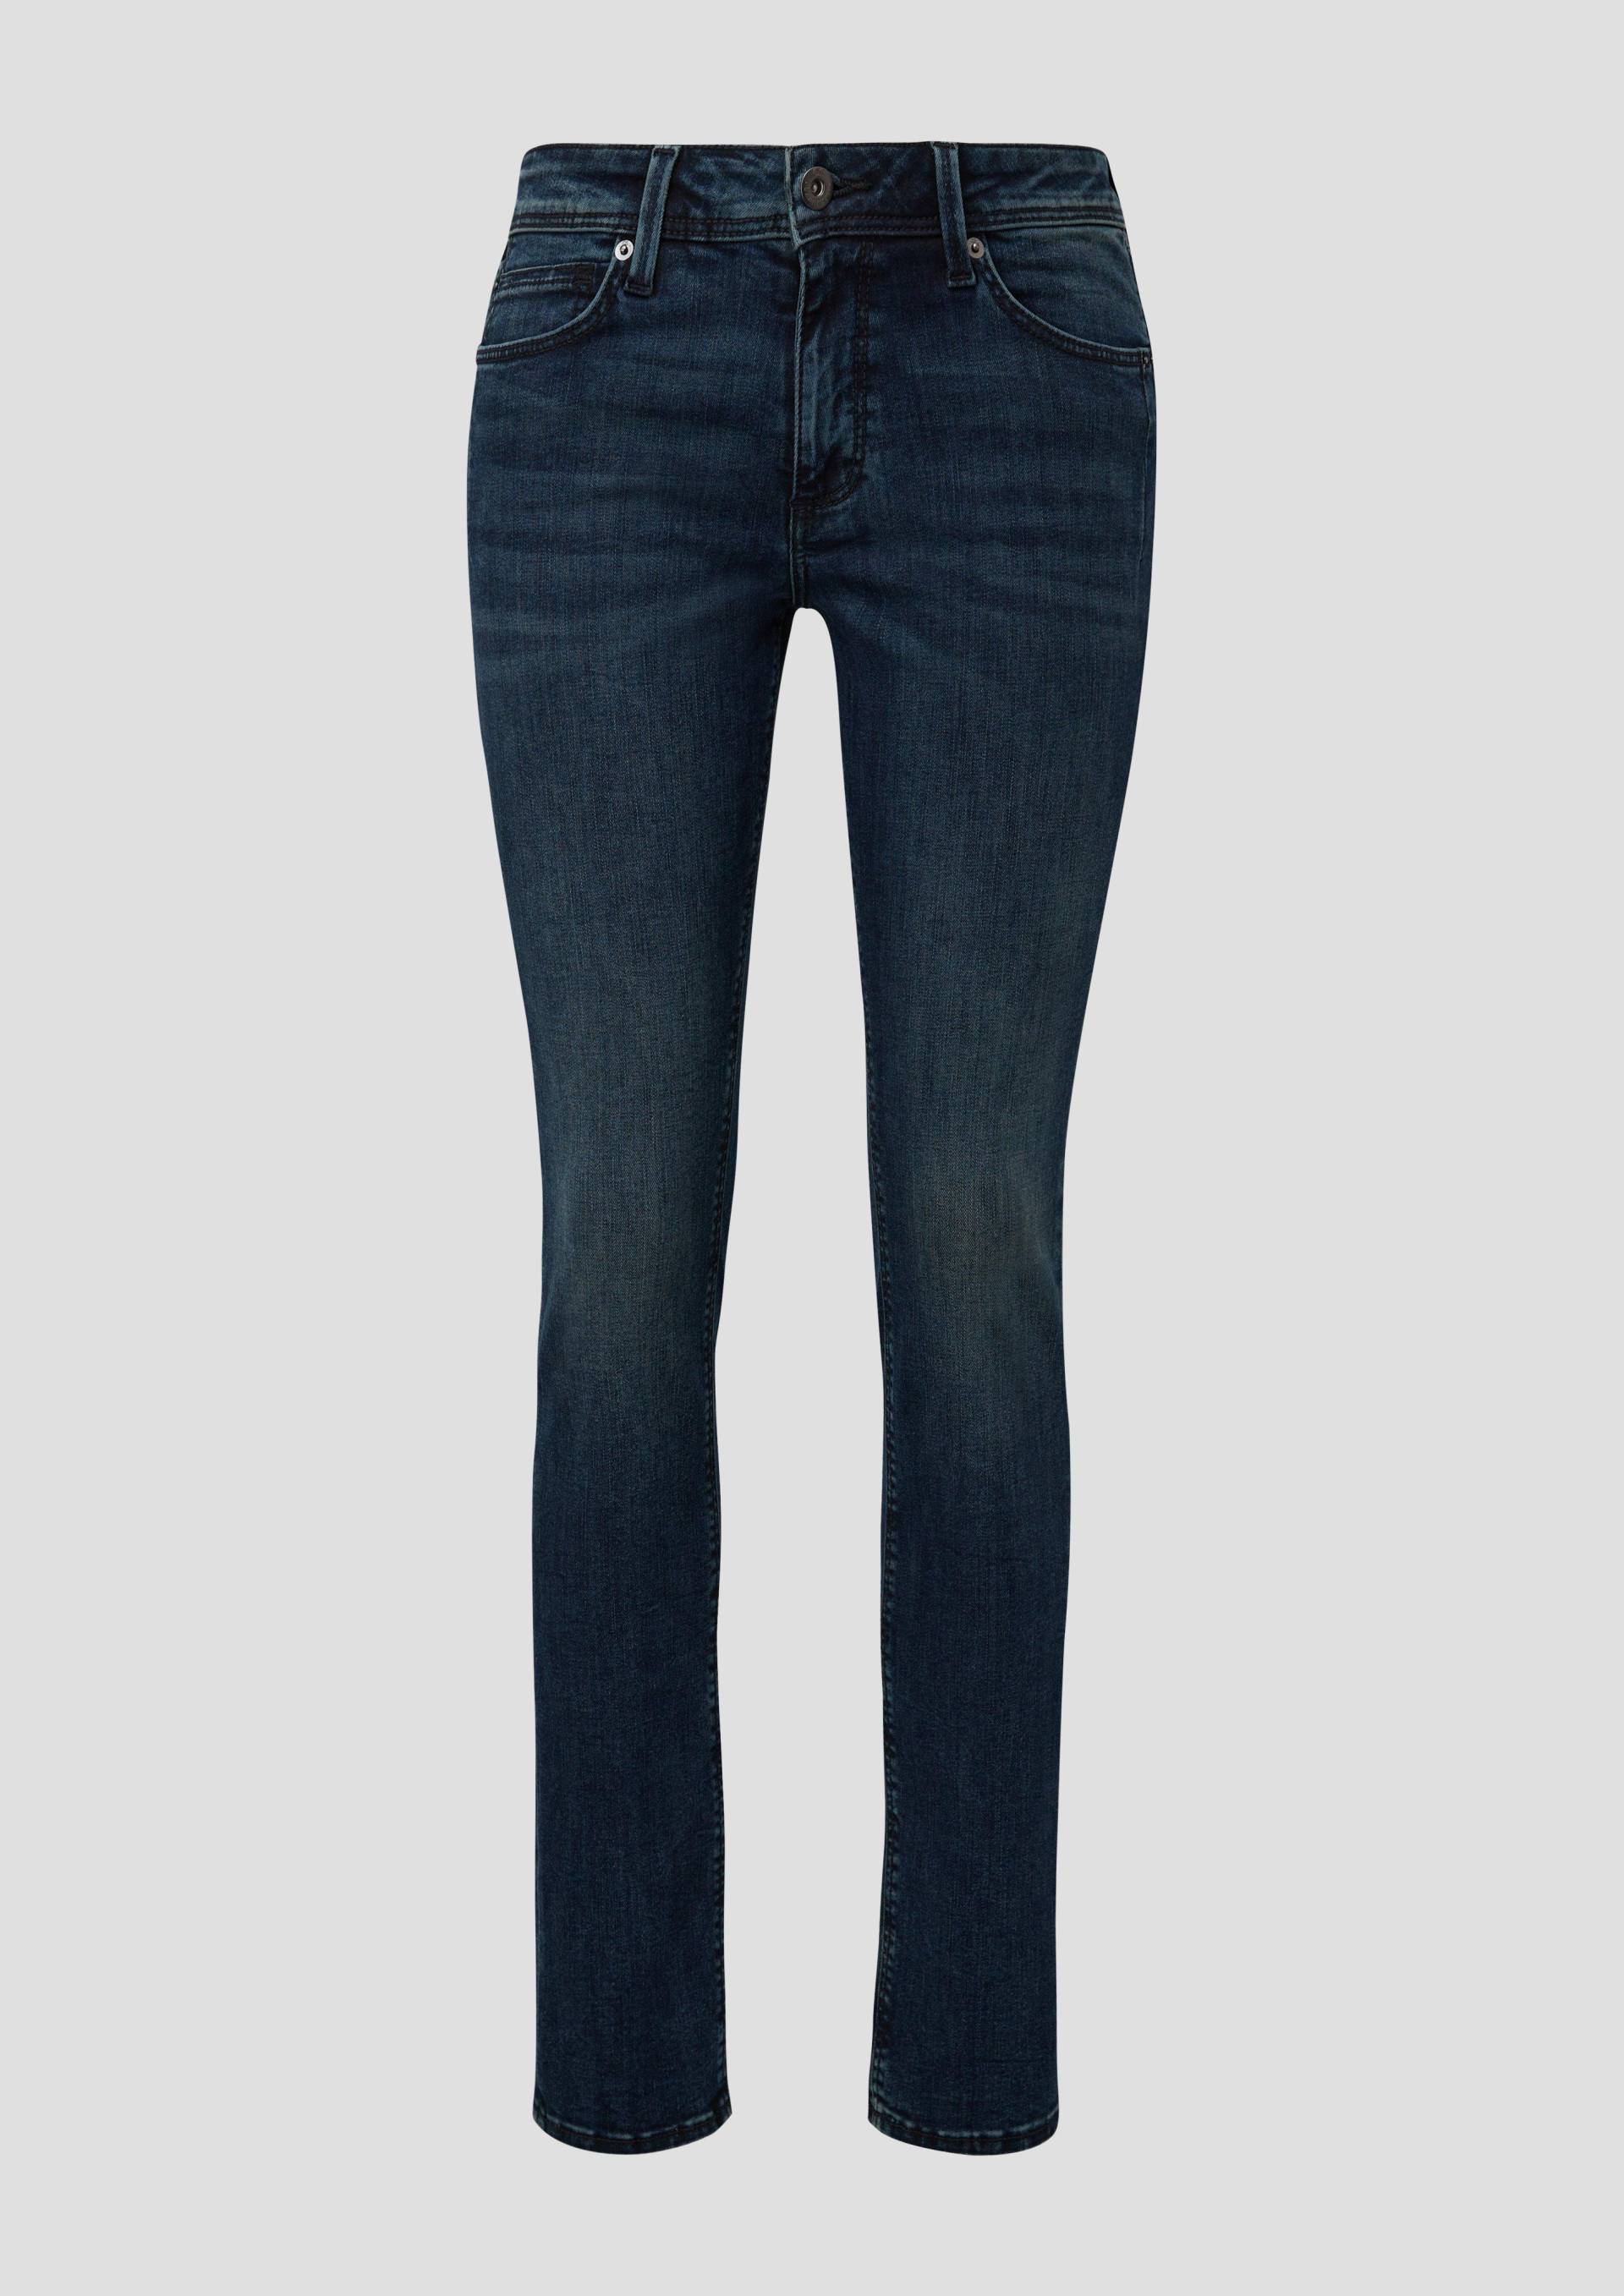 QS - Jeans Sadie/ Skinny Fit / Mid Rise / Skinny Leg, Damen, blau von QS